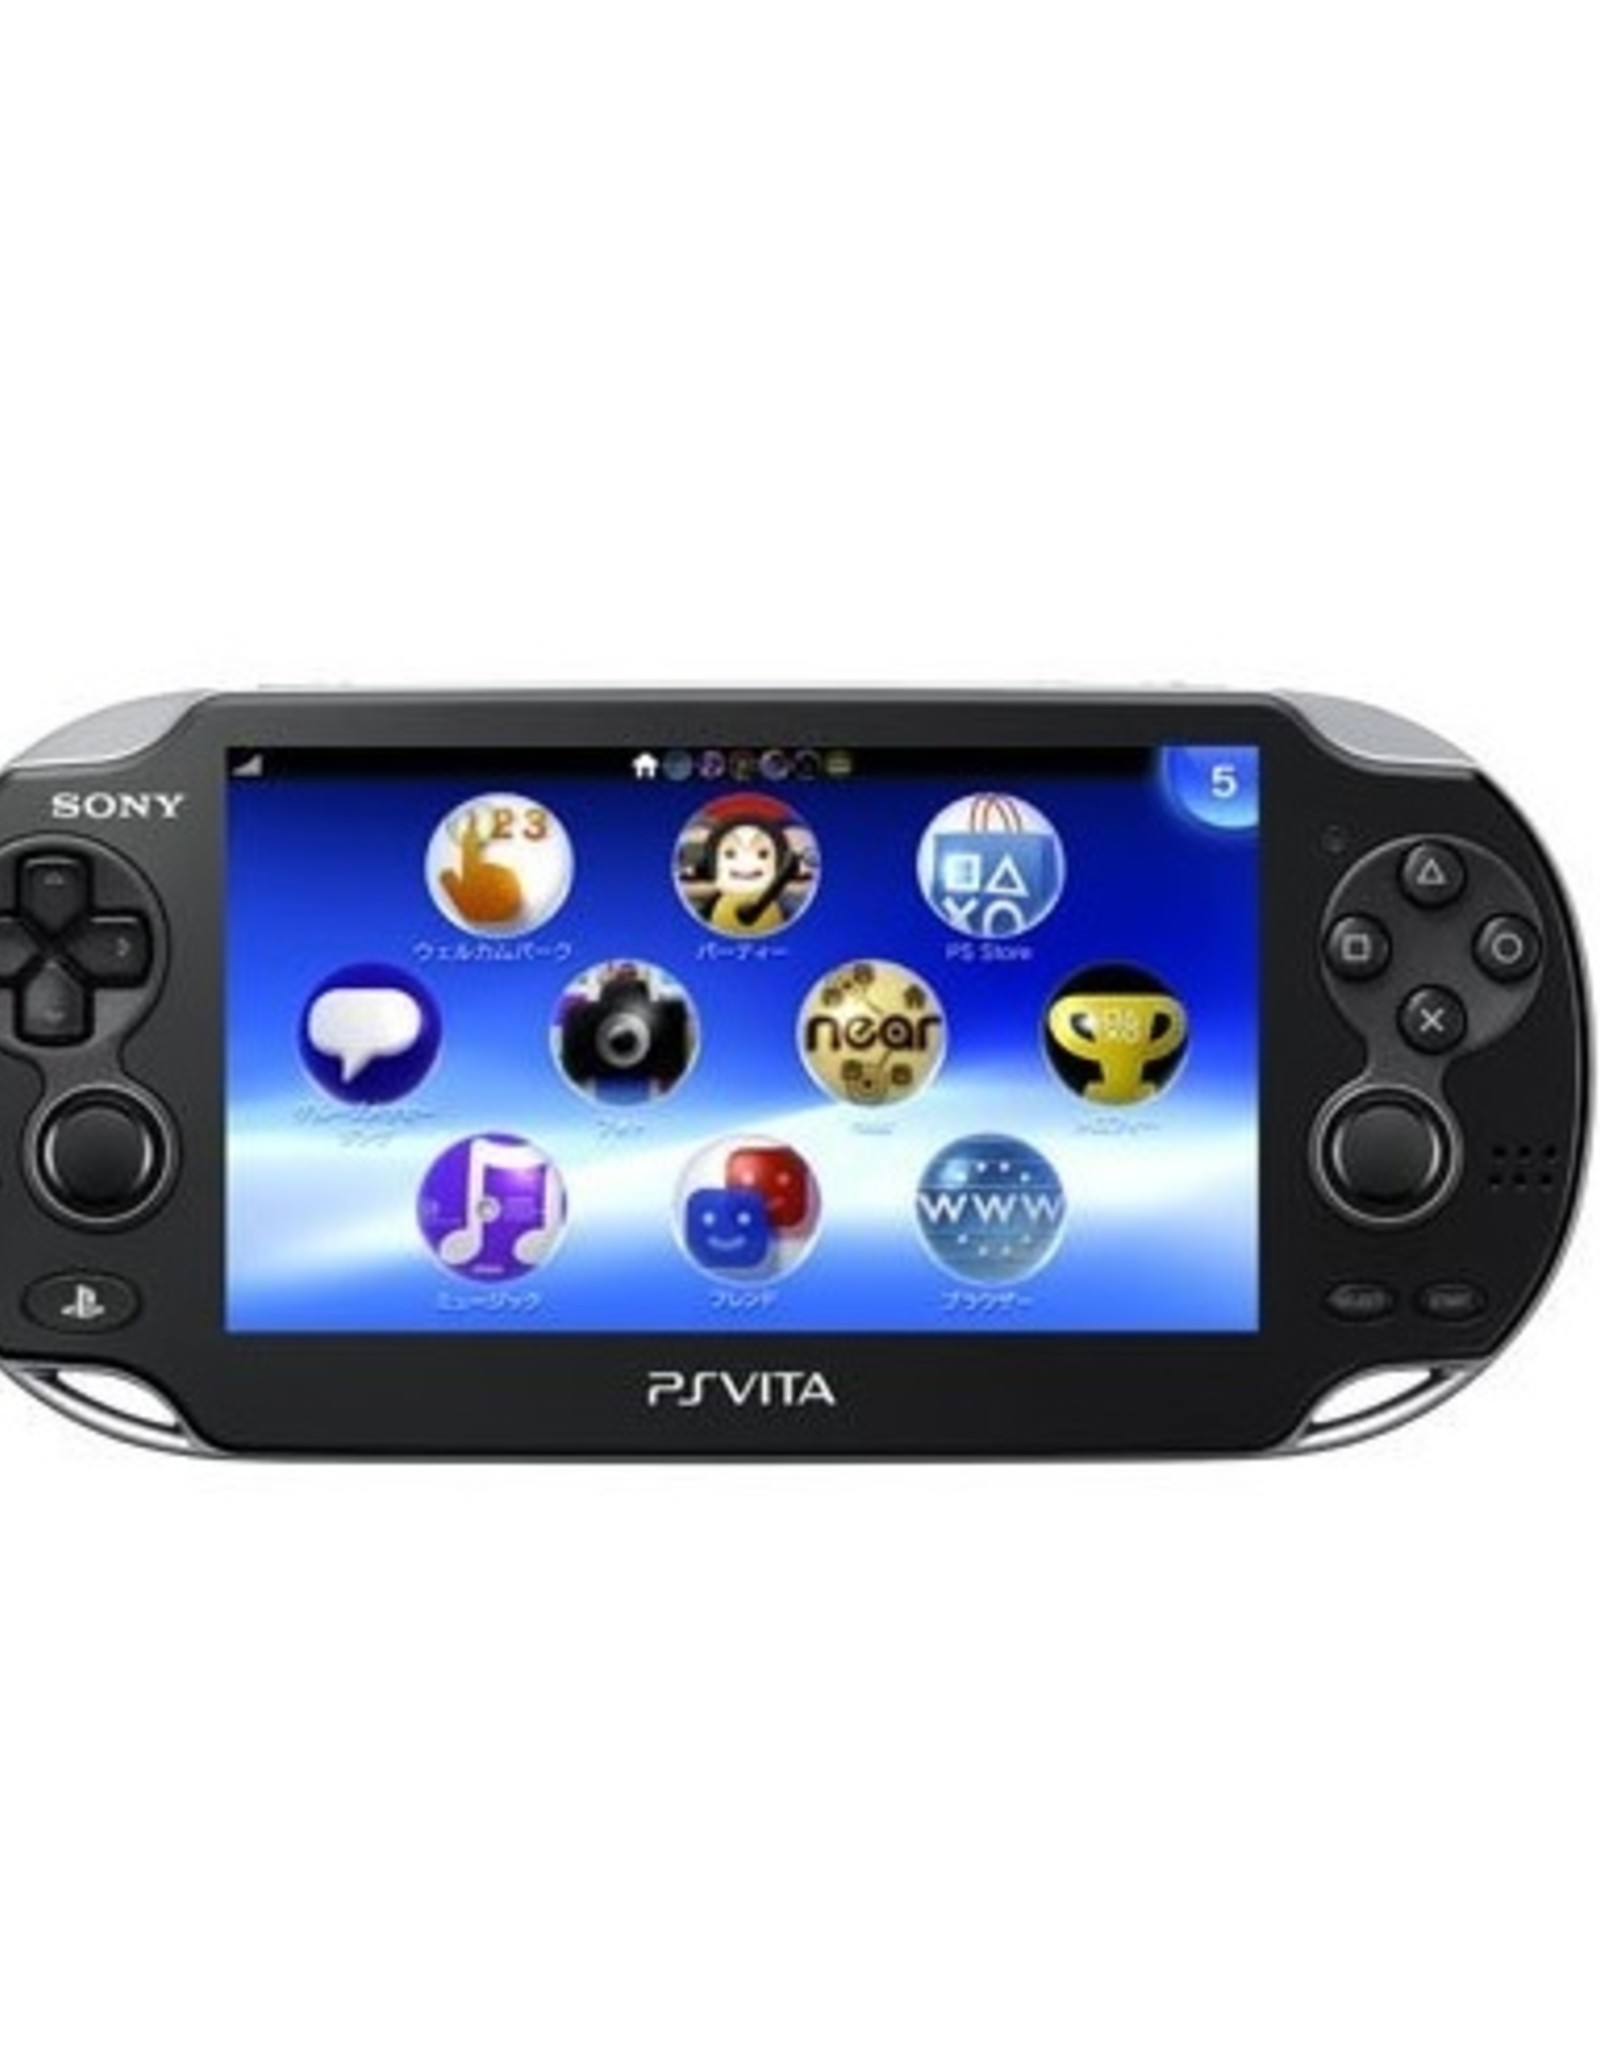 Sony Ps Vita Slim System Used Play Barbados